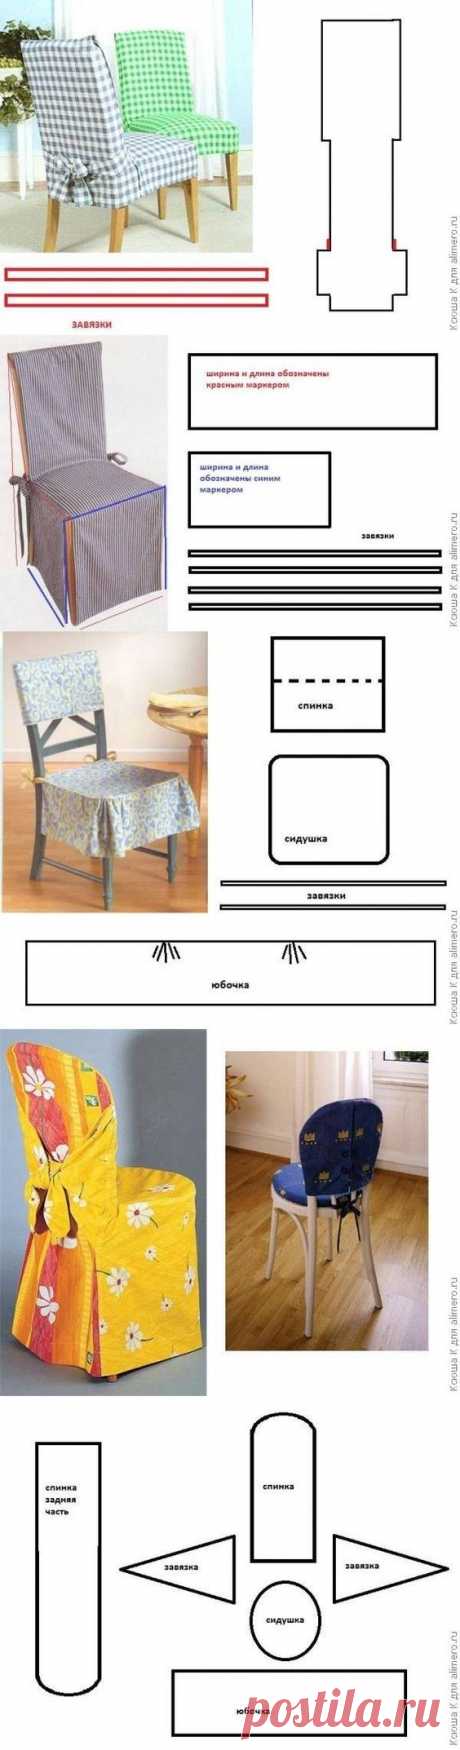 DIY Chair Covers | Manualidades